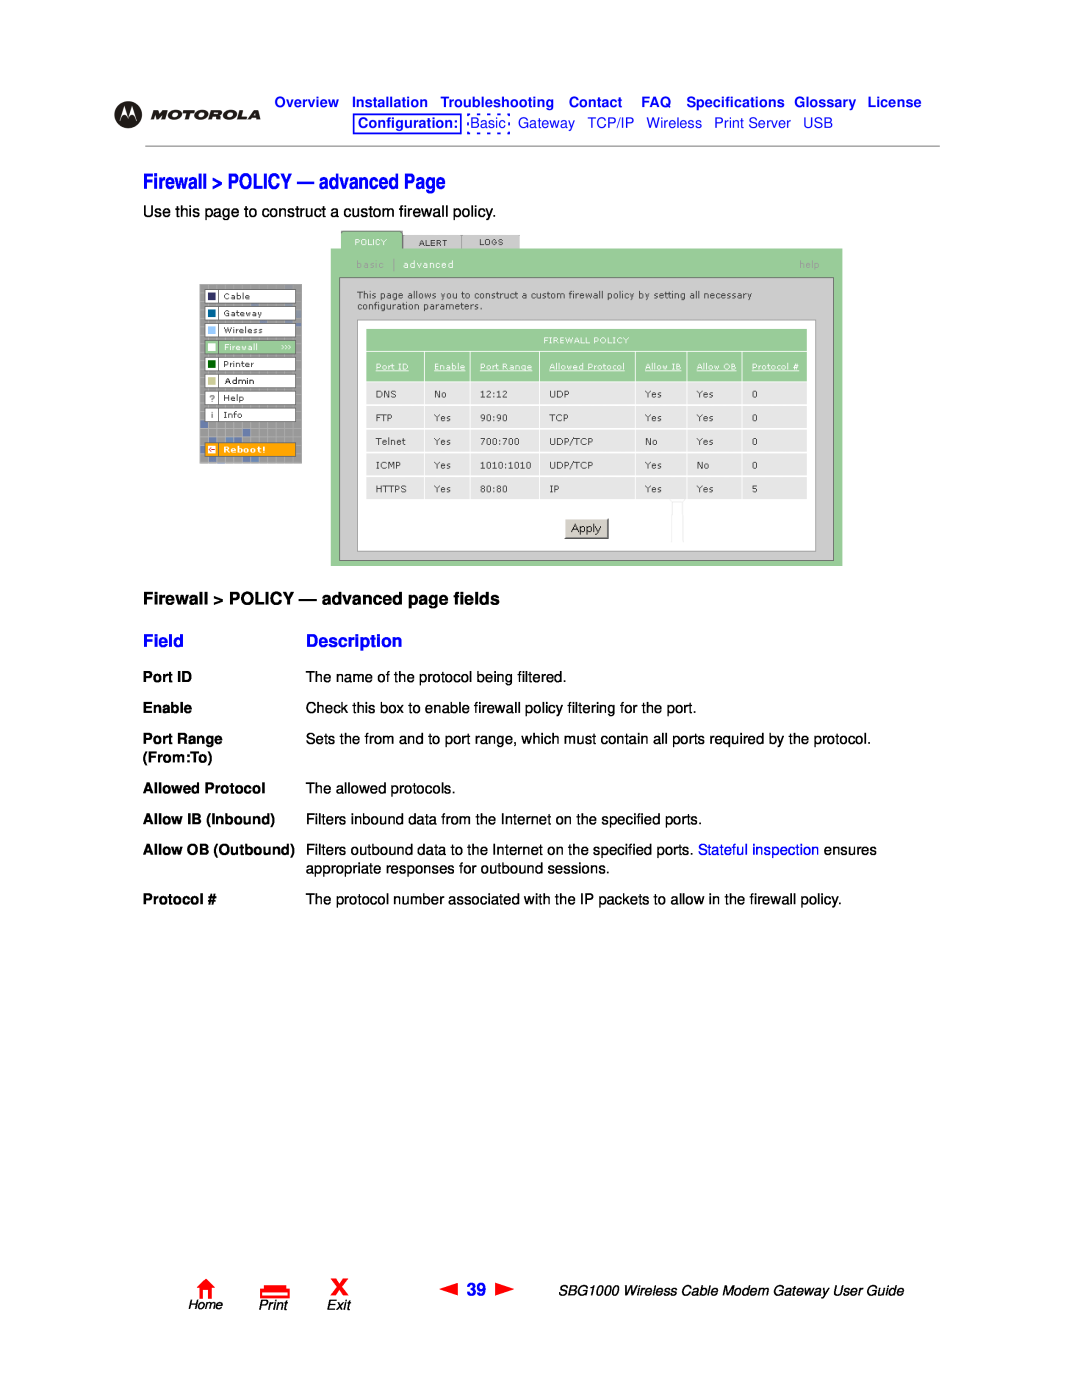 Motorola SBG1000 manual Firewall POLICY - advanced Page, Firewall POLICY - advanced page fields, Field, Description 